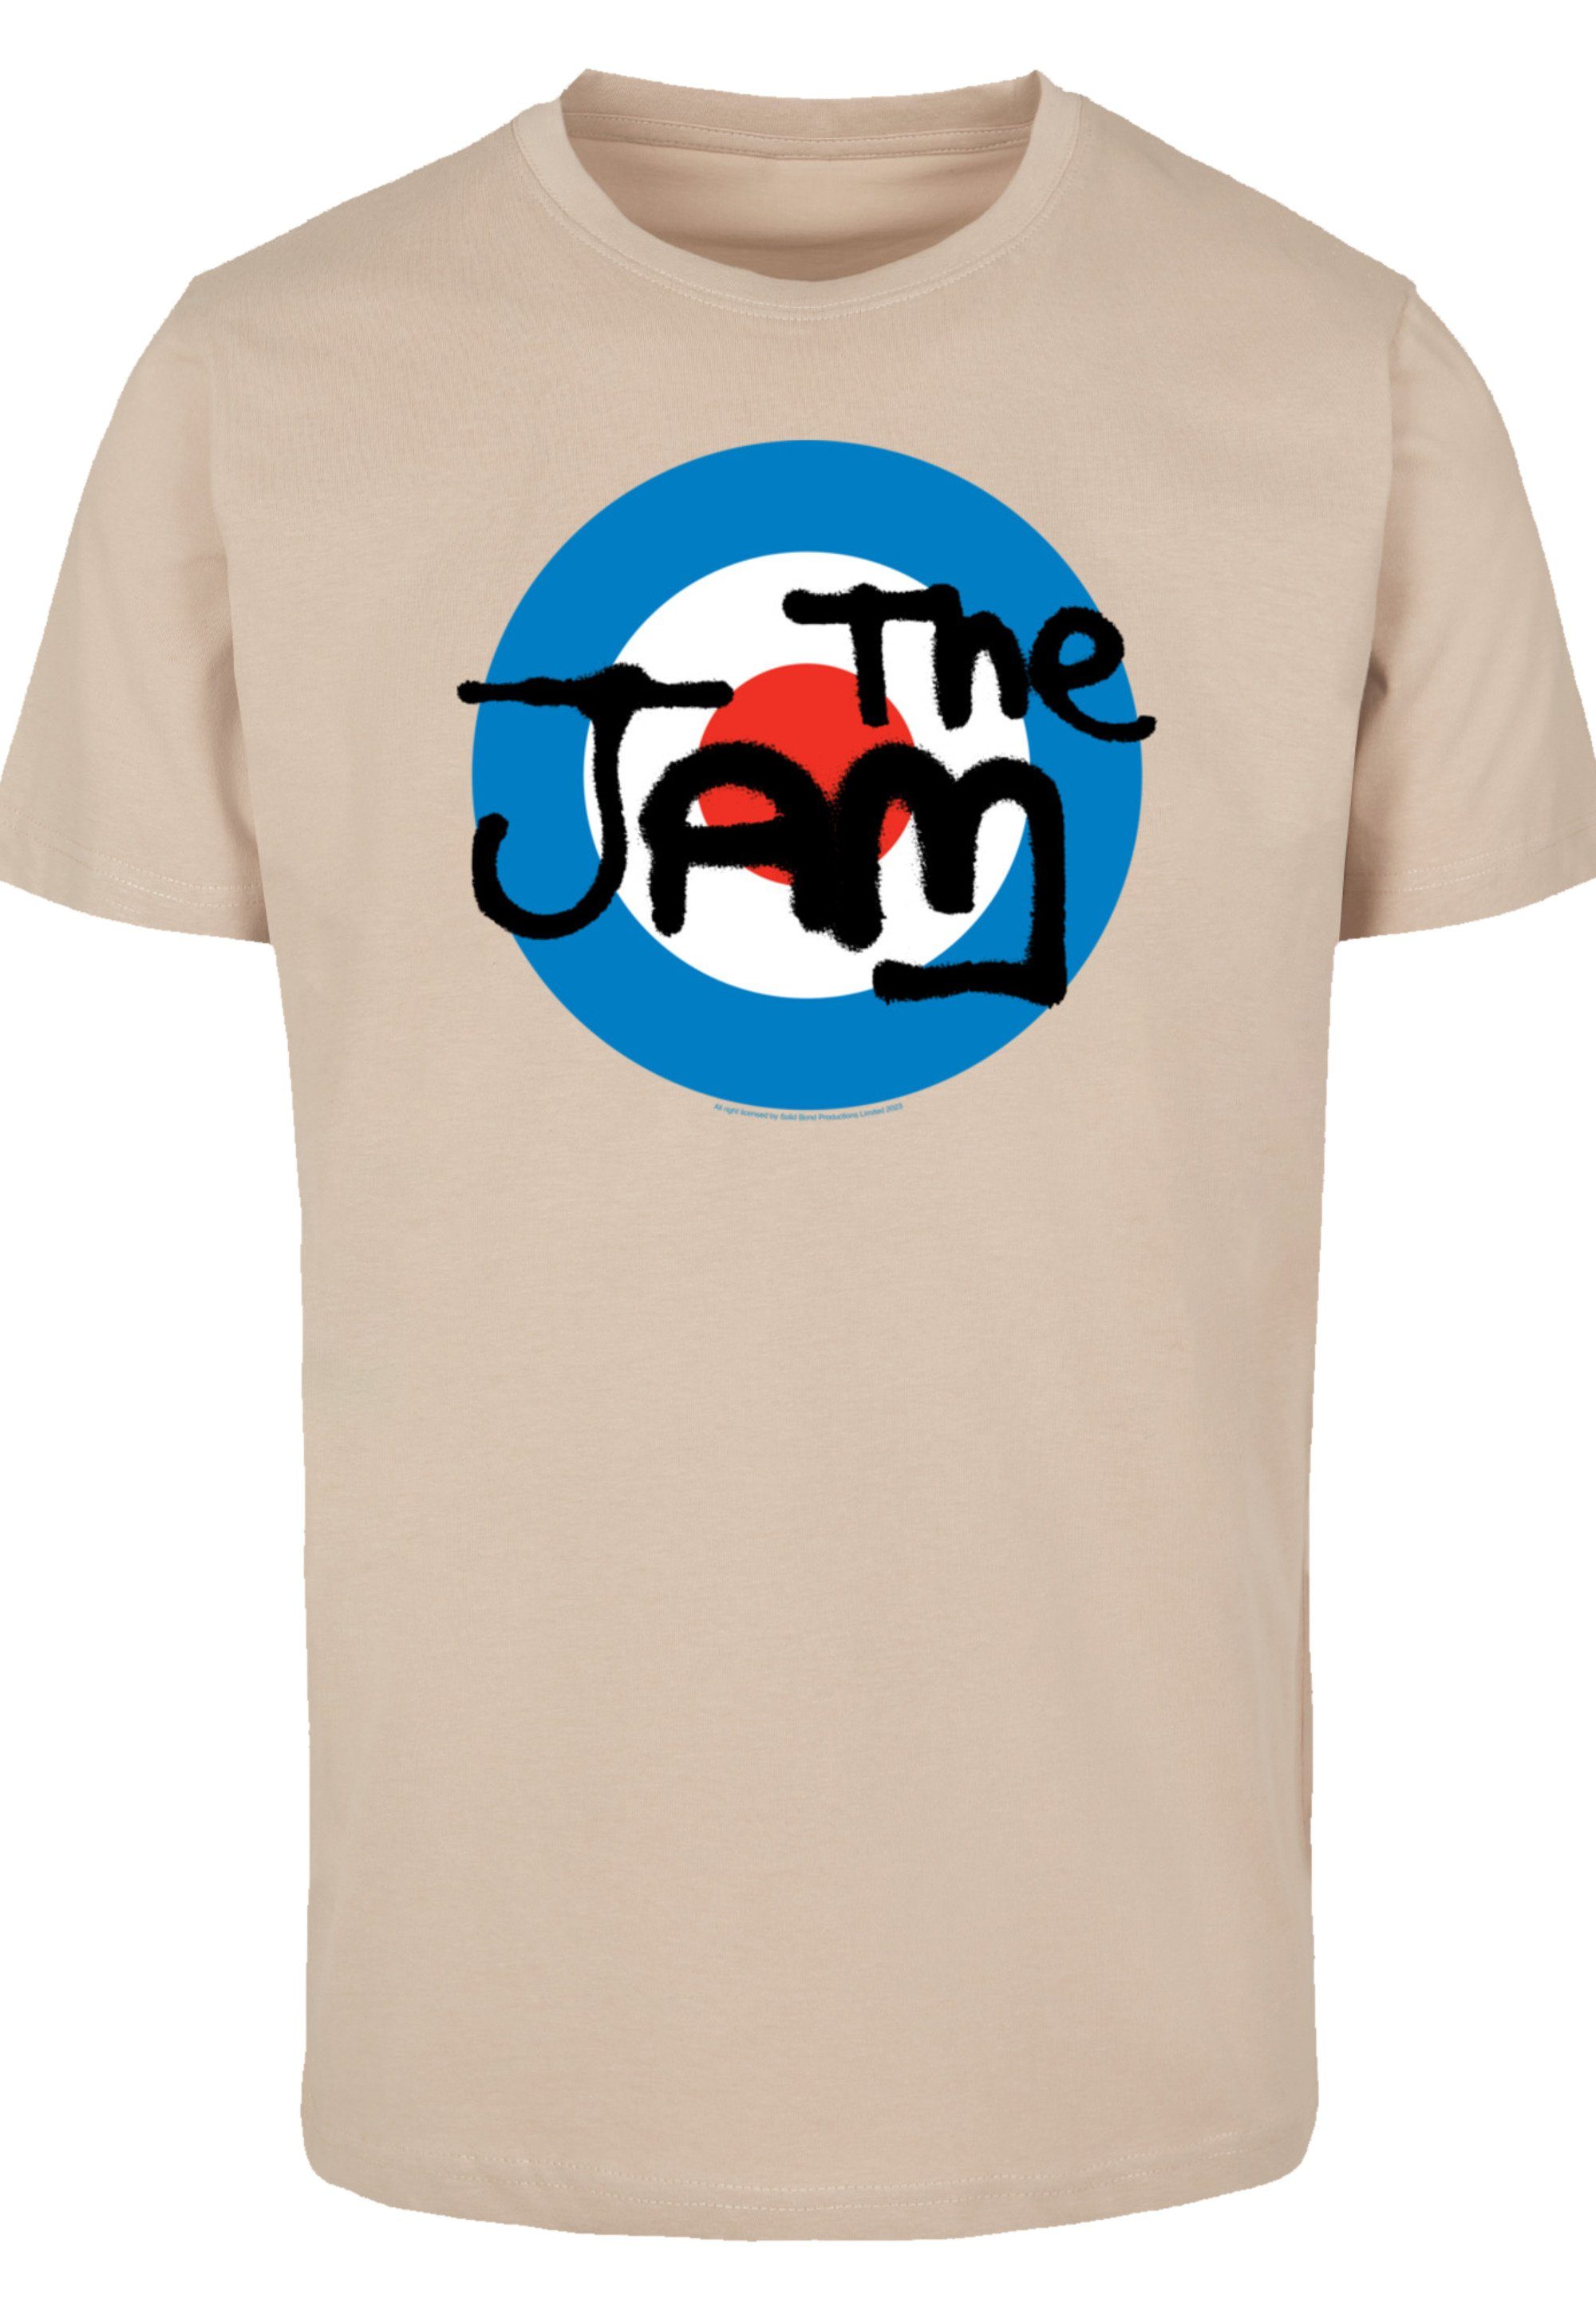 Logo und T-Shirt Qualität, am Doppelnähte Band F4NT4STIC Hals am Rippbündchen Jam Saum Premium The Classic